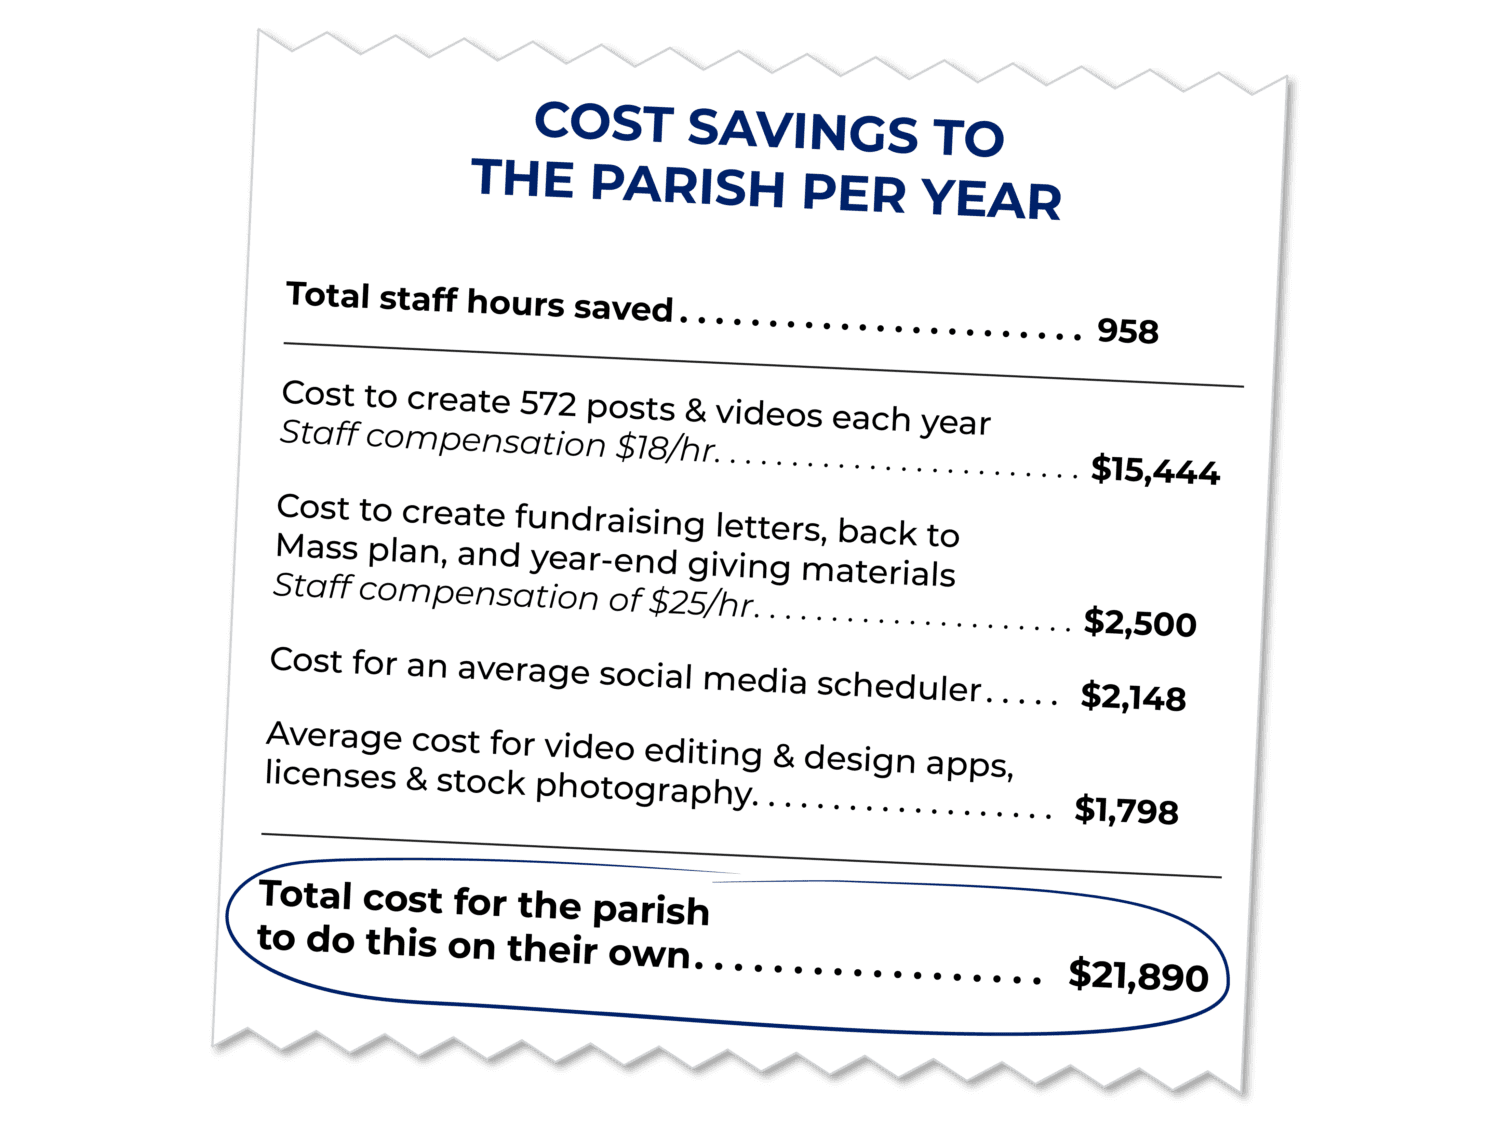 Annual Cost Savings